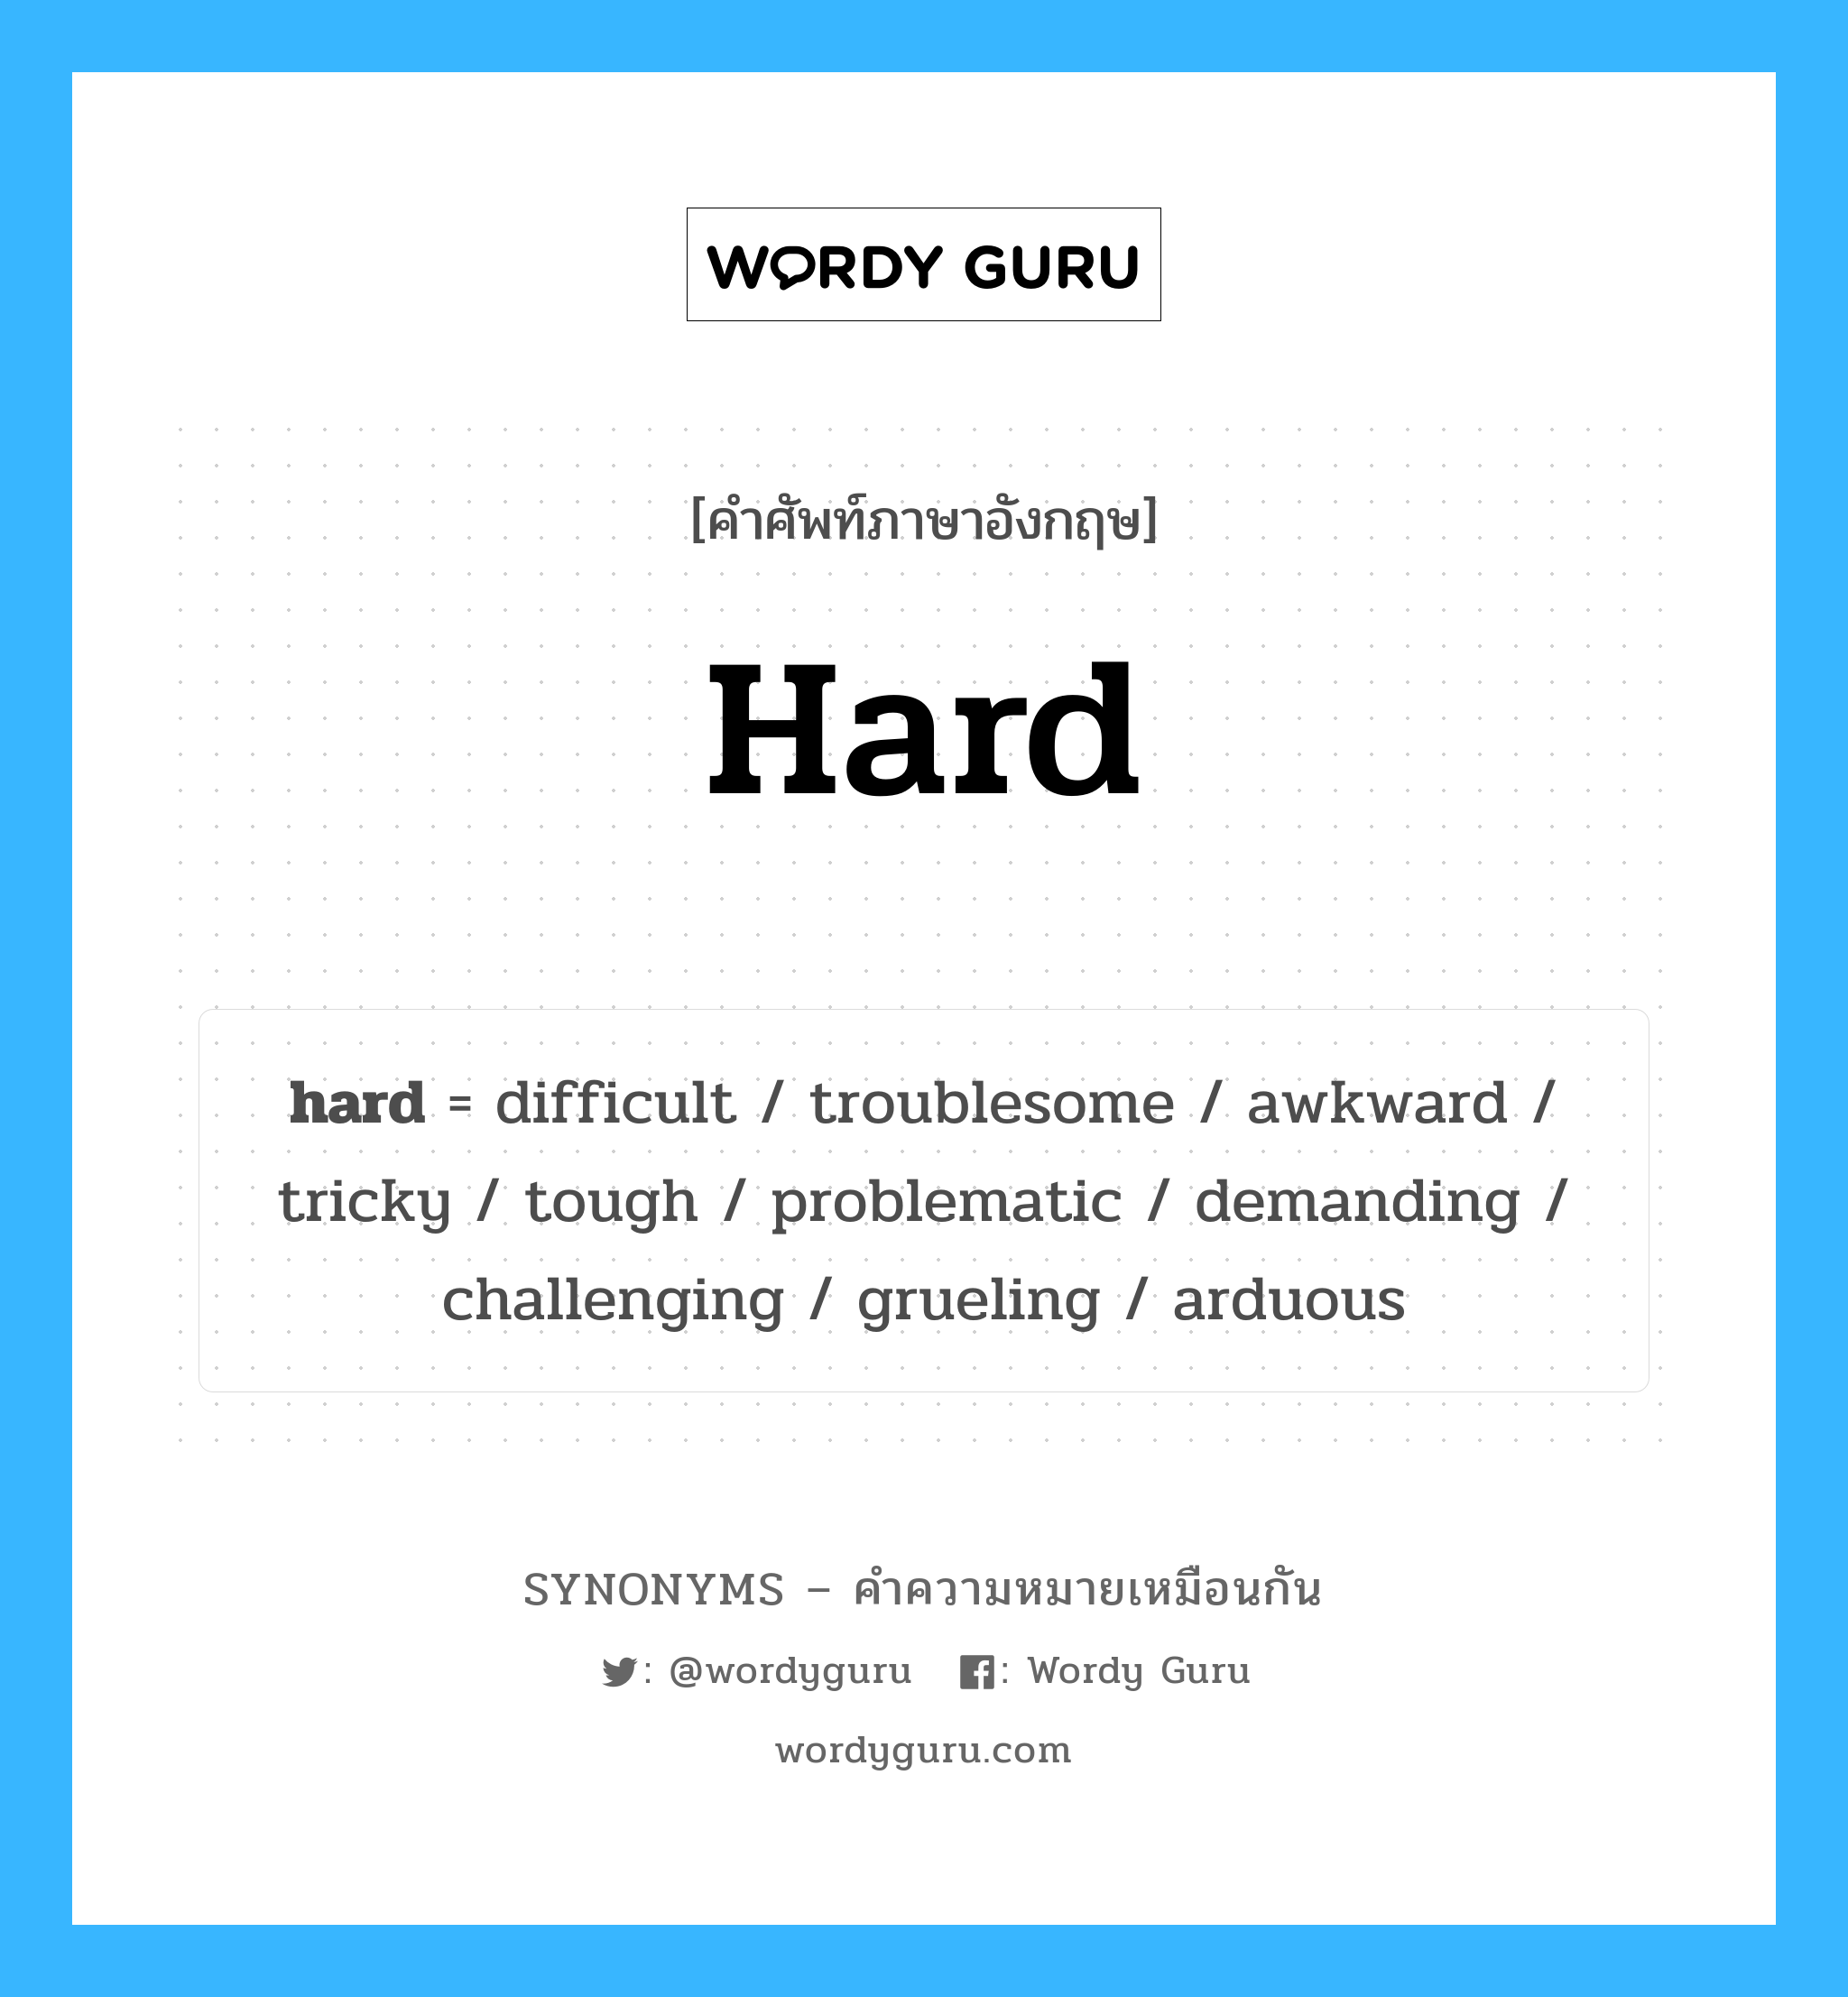 difficult เป็นหนึ่งใน hard และมีคำอื่น ๆ อีกดังนี้, คำศัพท์ภาษาอังกฤษ difficult ความหมายคล้ายกันกับ hard แปลว่า ยาก หมวด hard